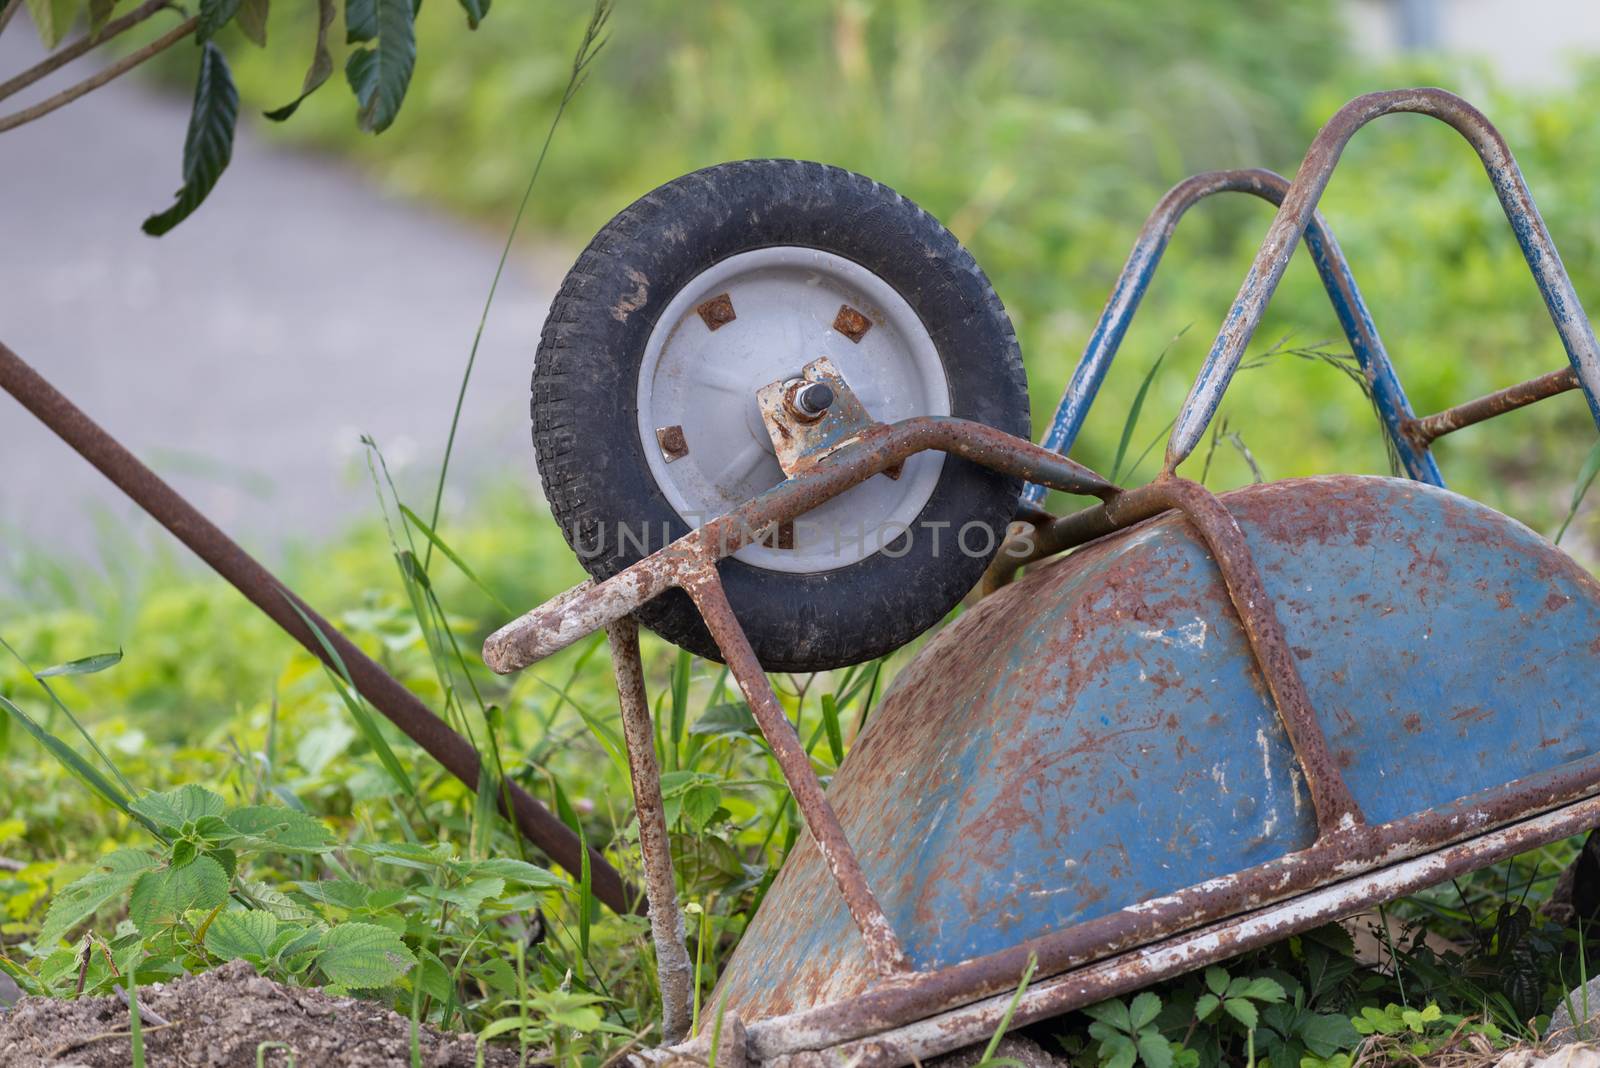 An old rusty blue wheelbarrow lying upside down in overgrown grass